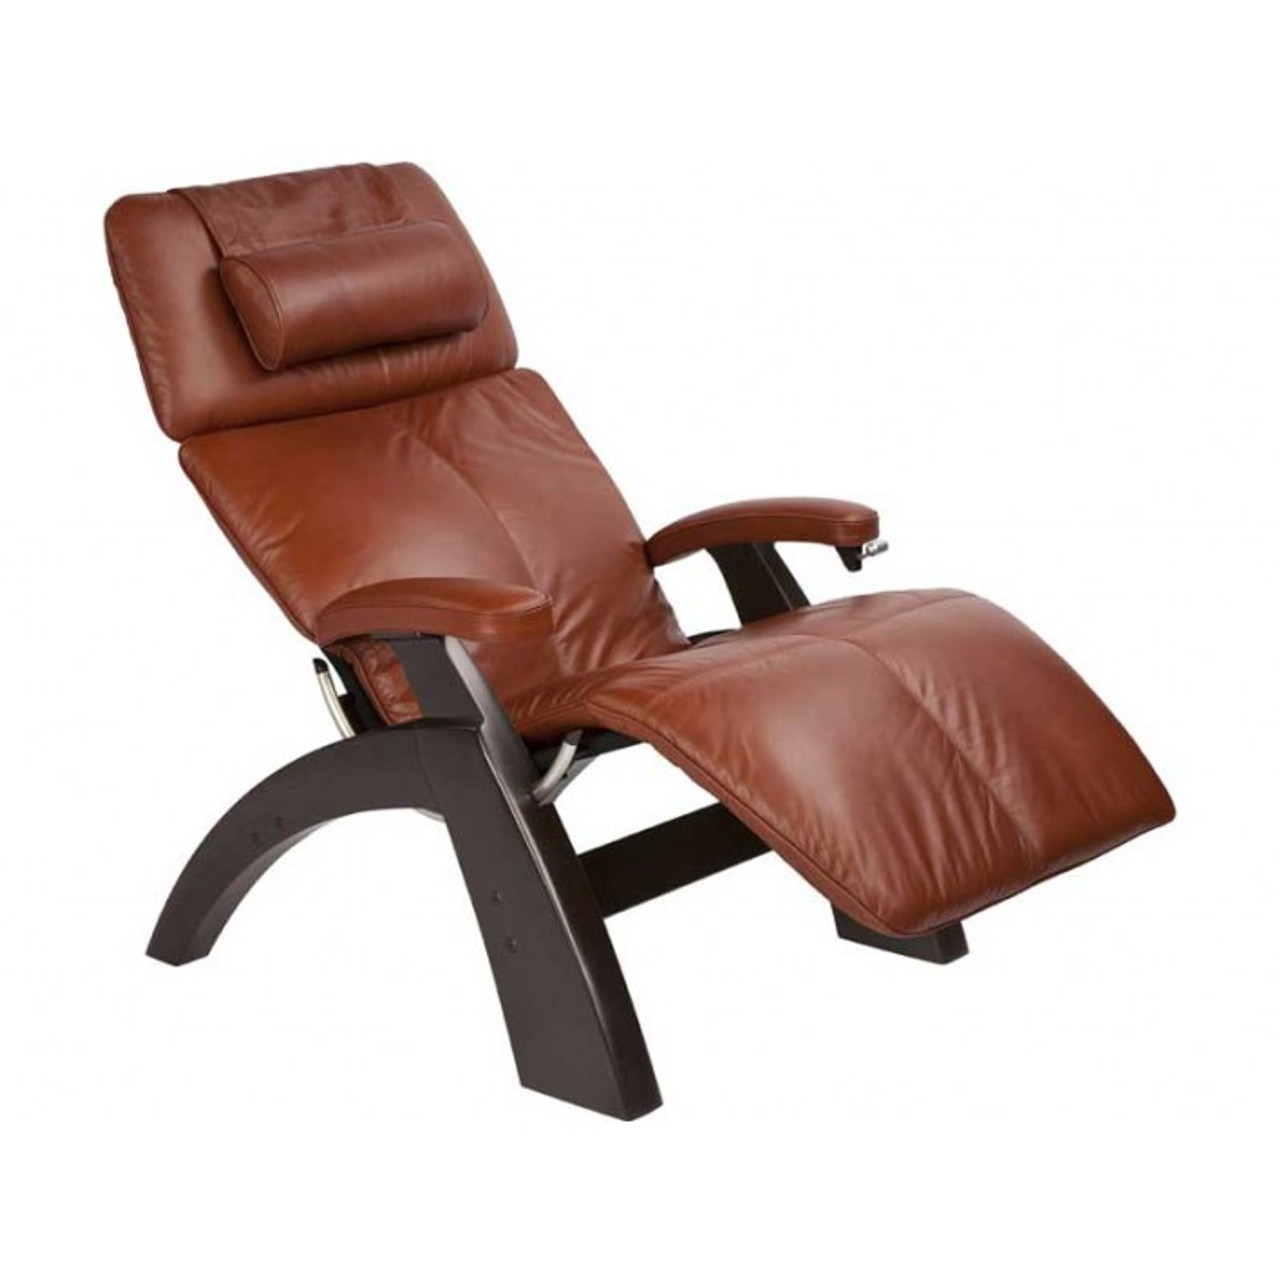 pc6 perfect chair classic manual zerogravity recliner